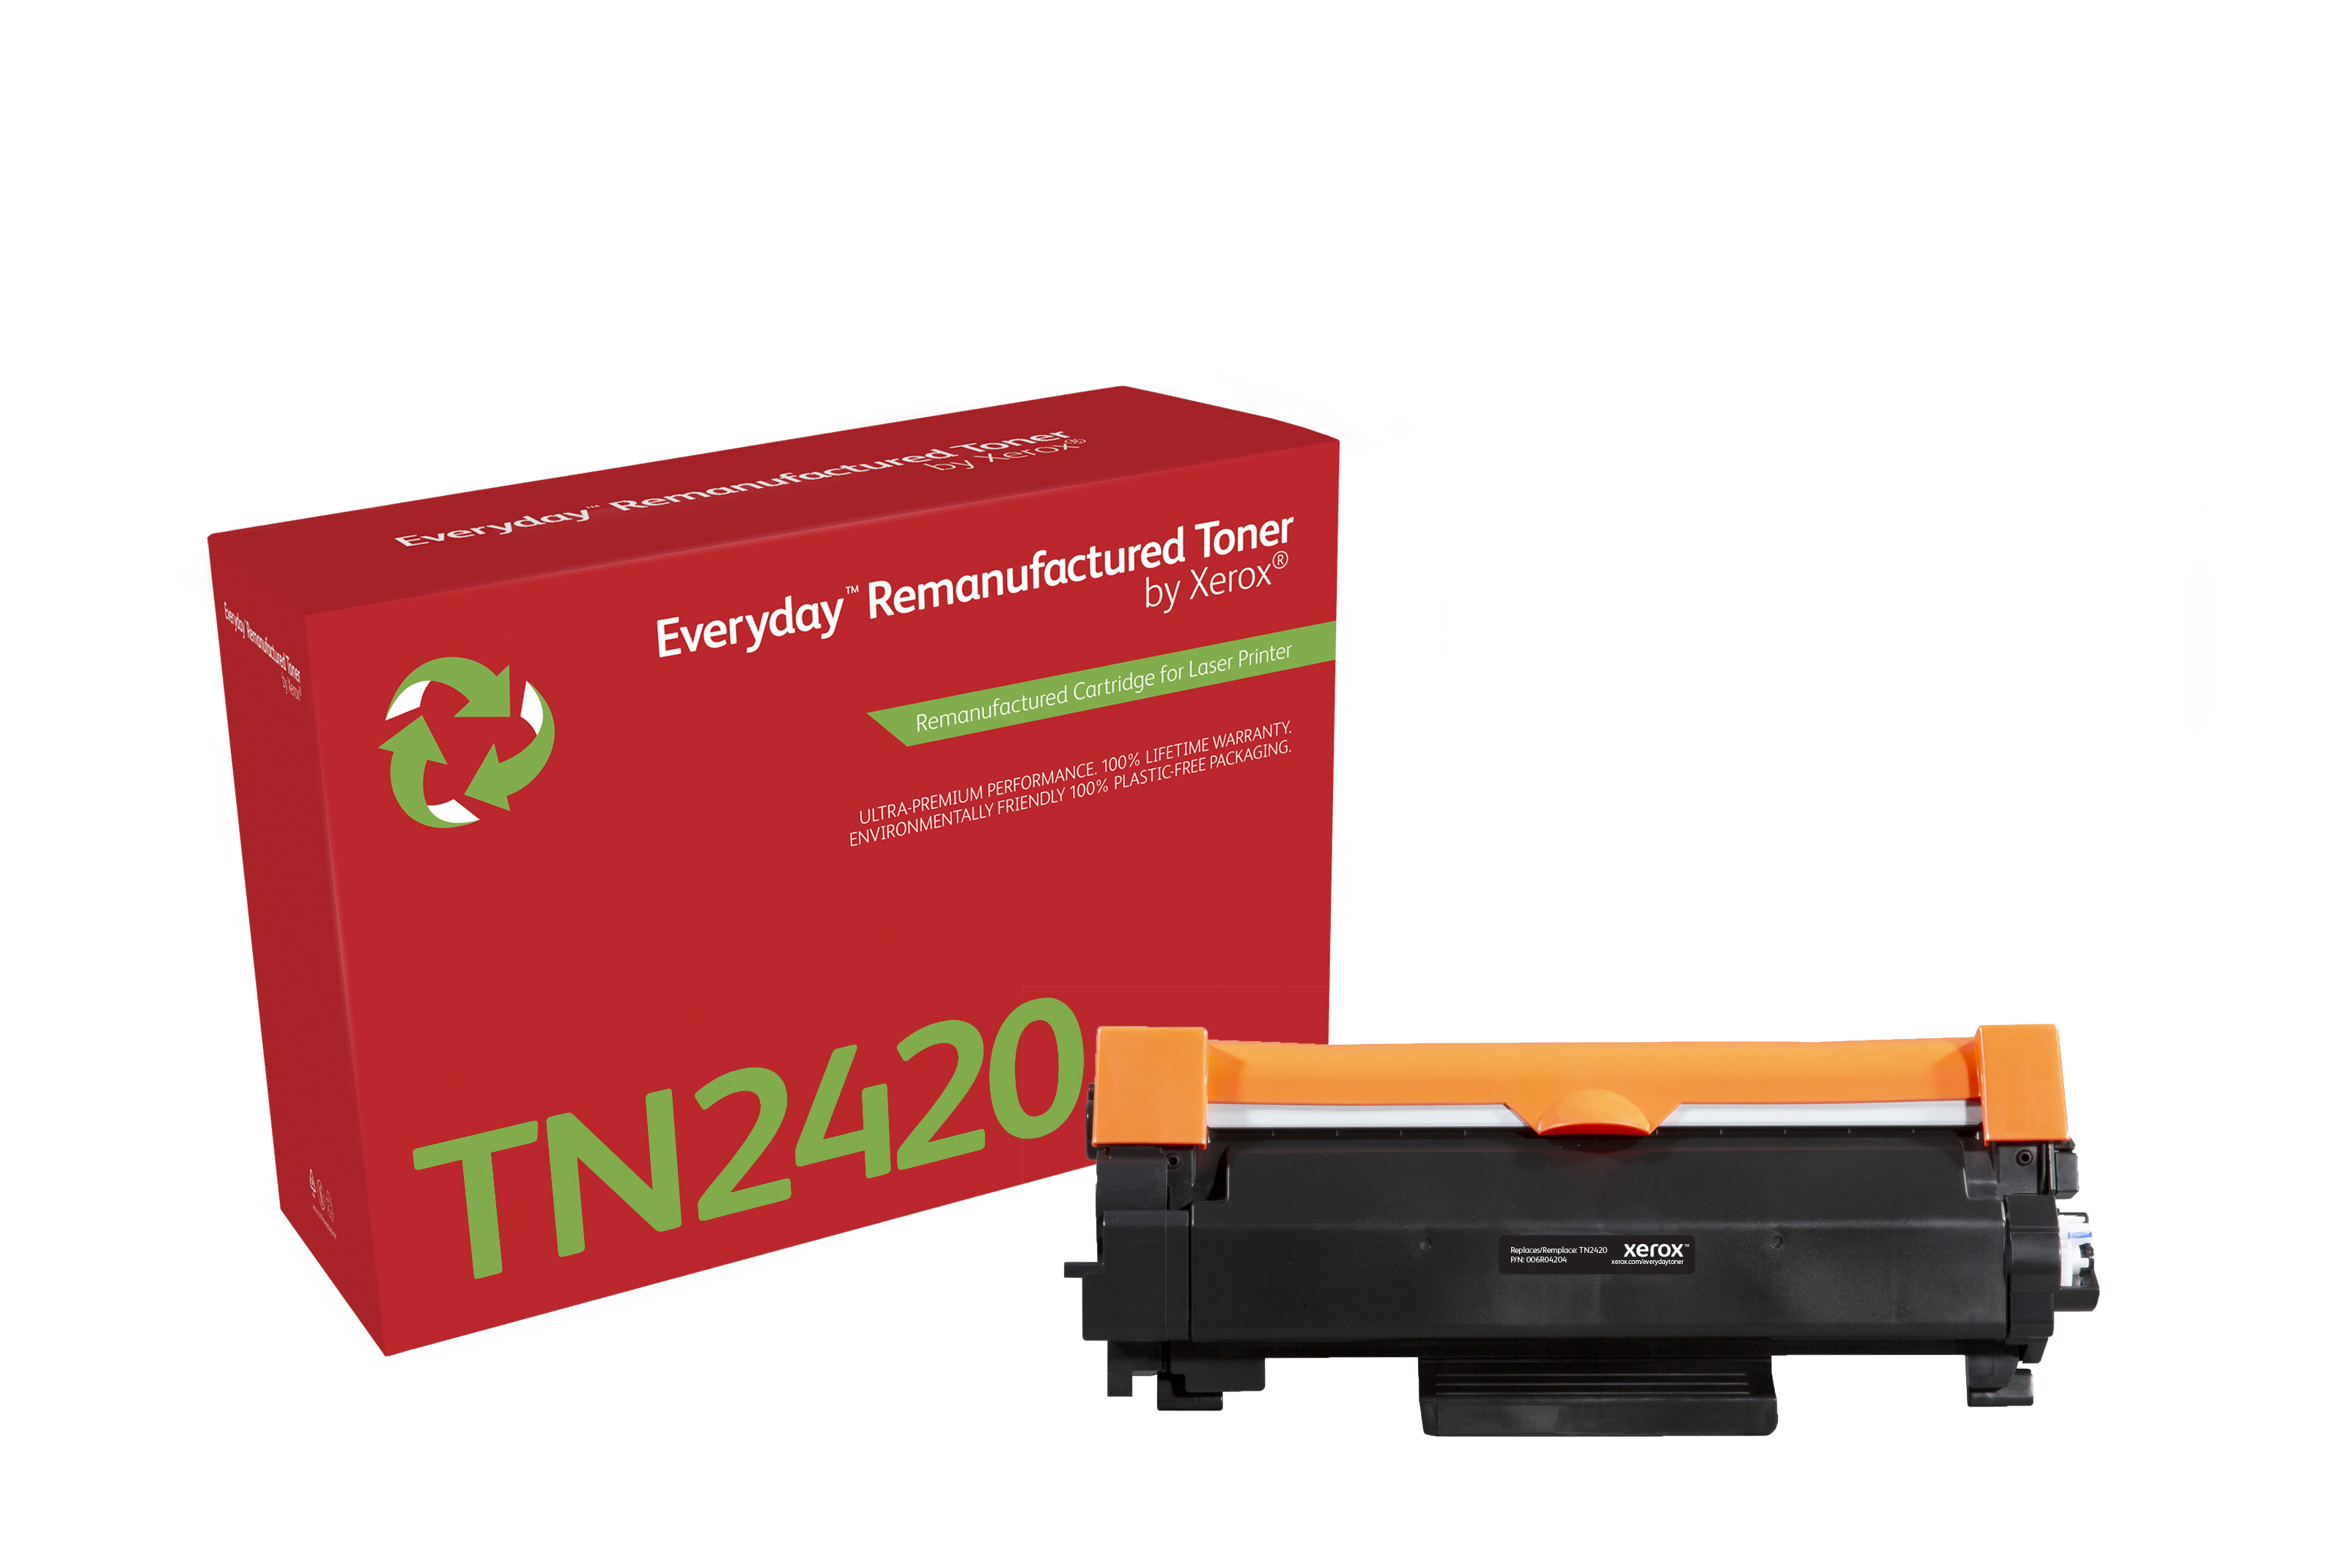 TN2420 Toner Cartouche de Compatible pour Toner Brother TN2420